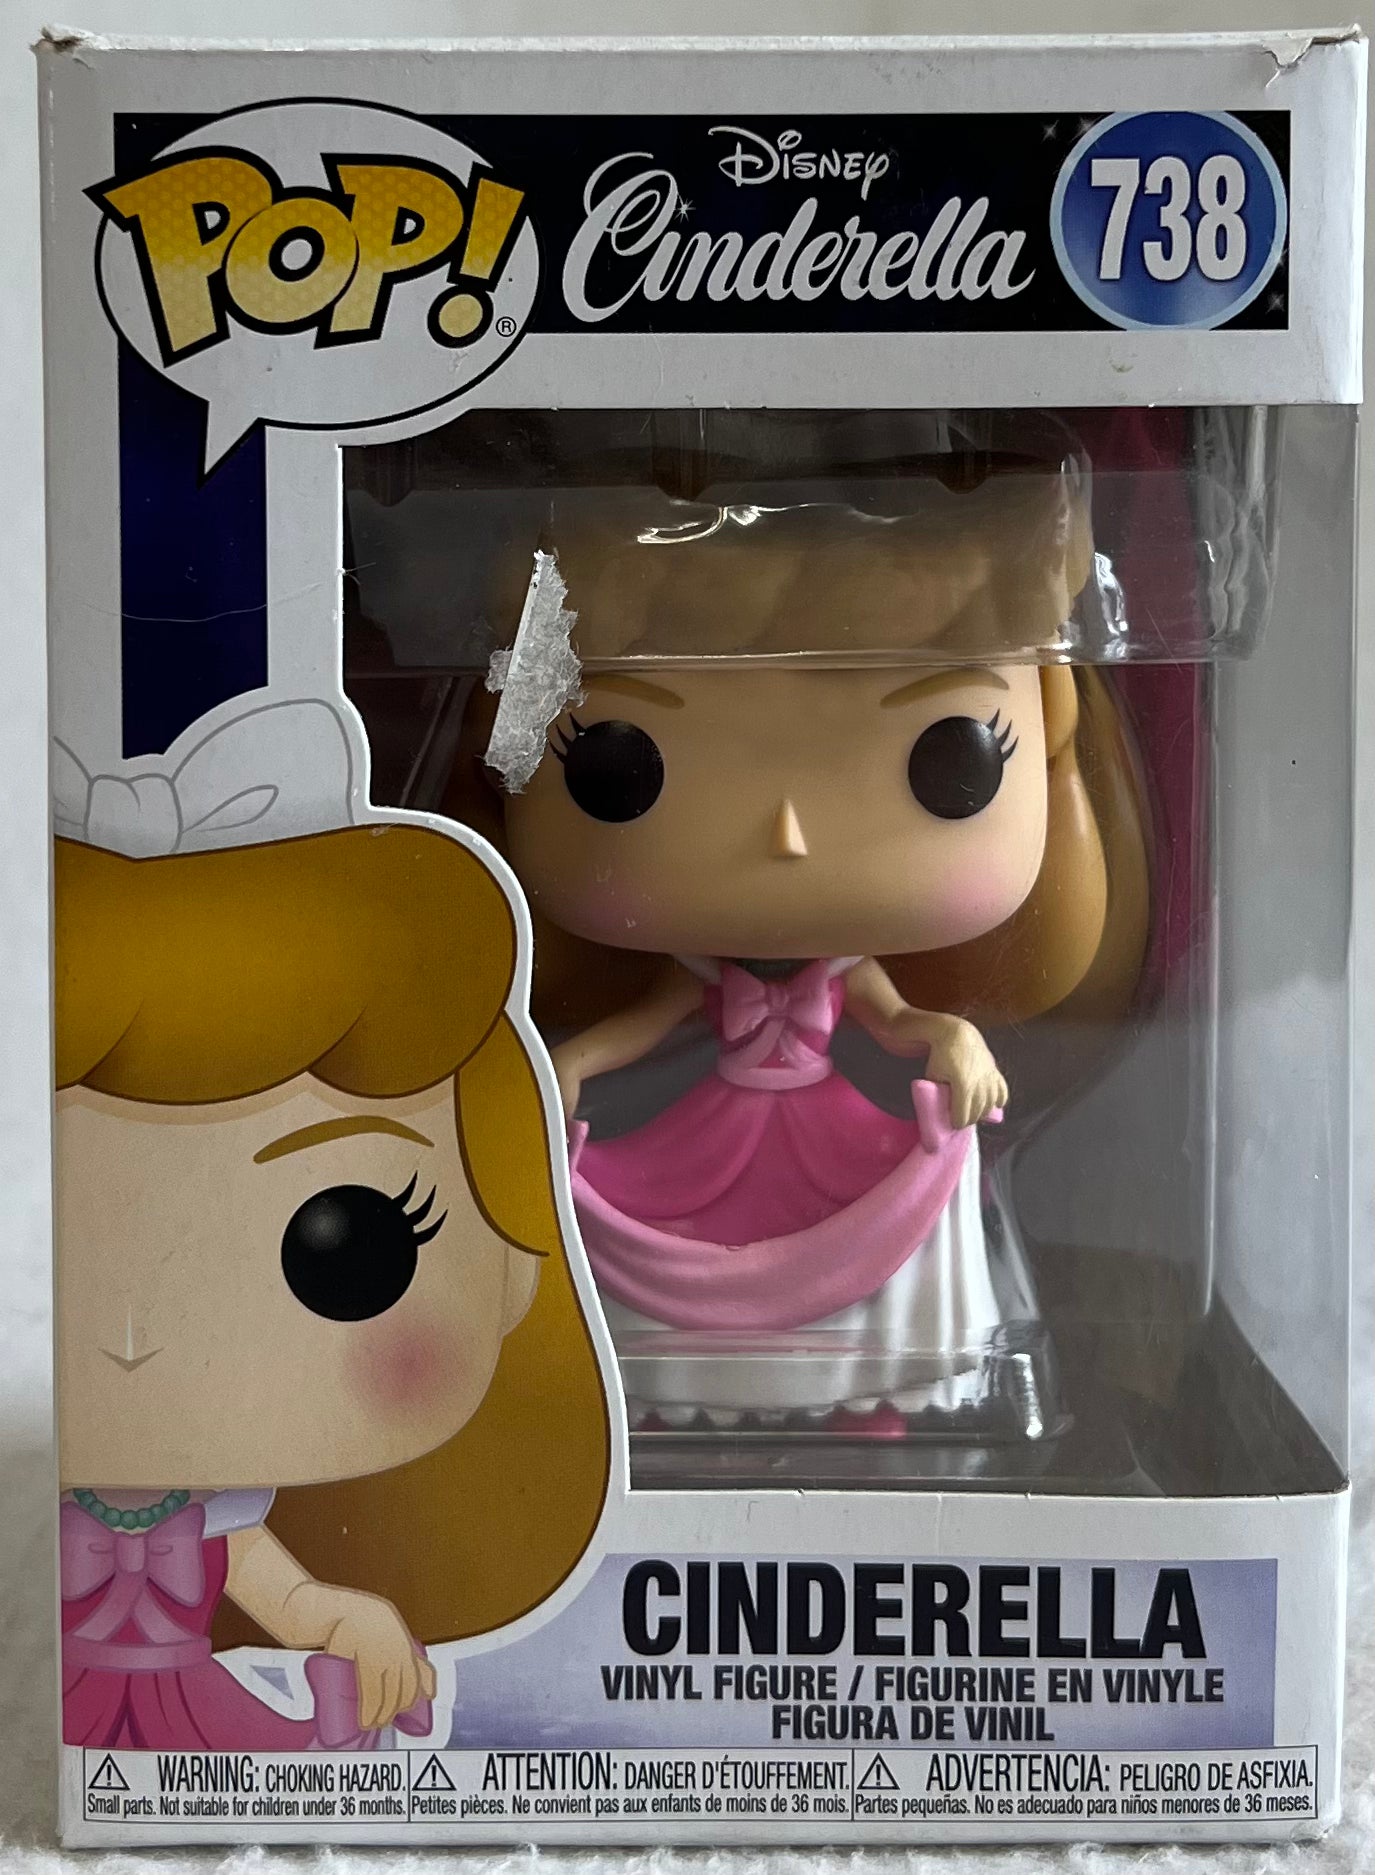 FUNKO POP! #738 Cinderella 'Disney'